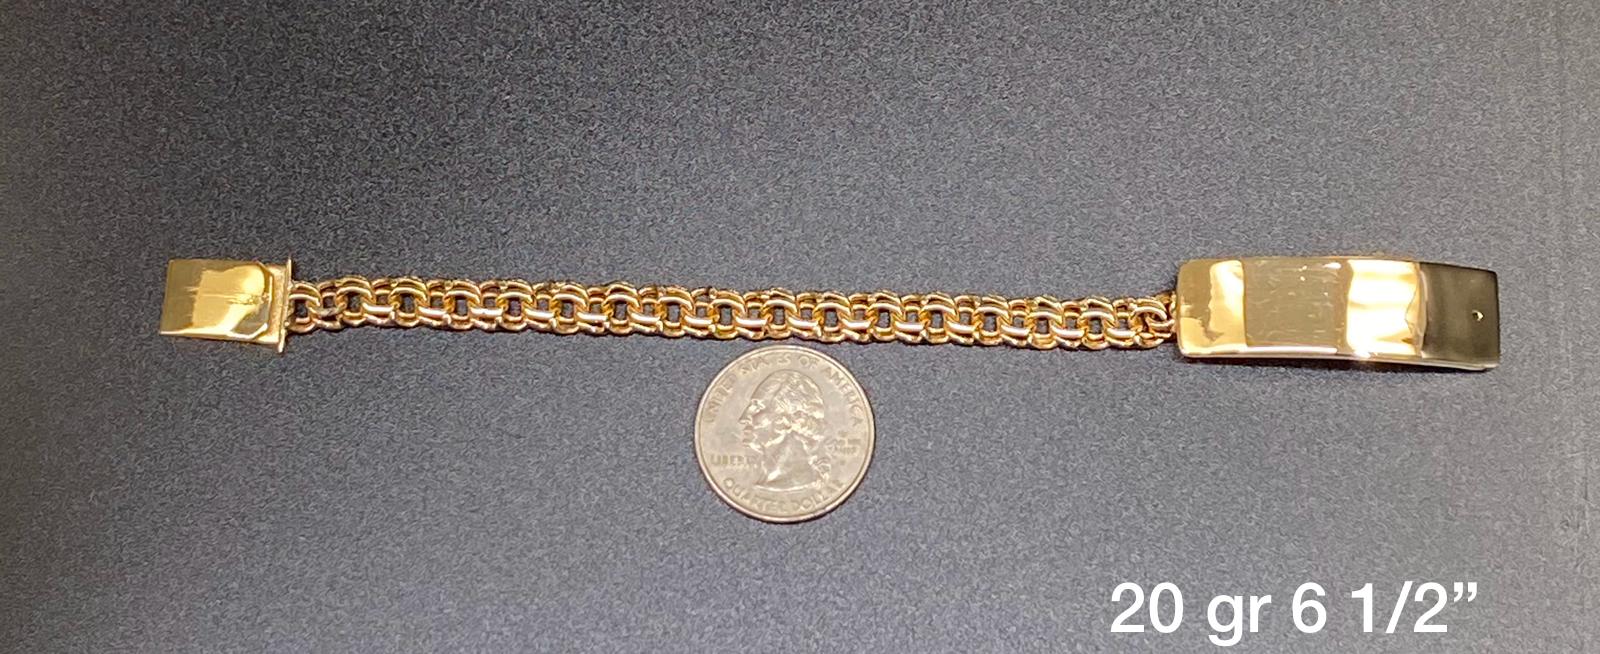 14k Yellow, Double Link Bracelet, 20 grams | eBay